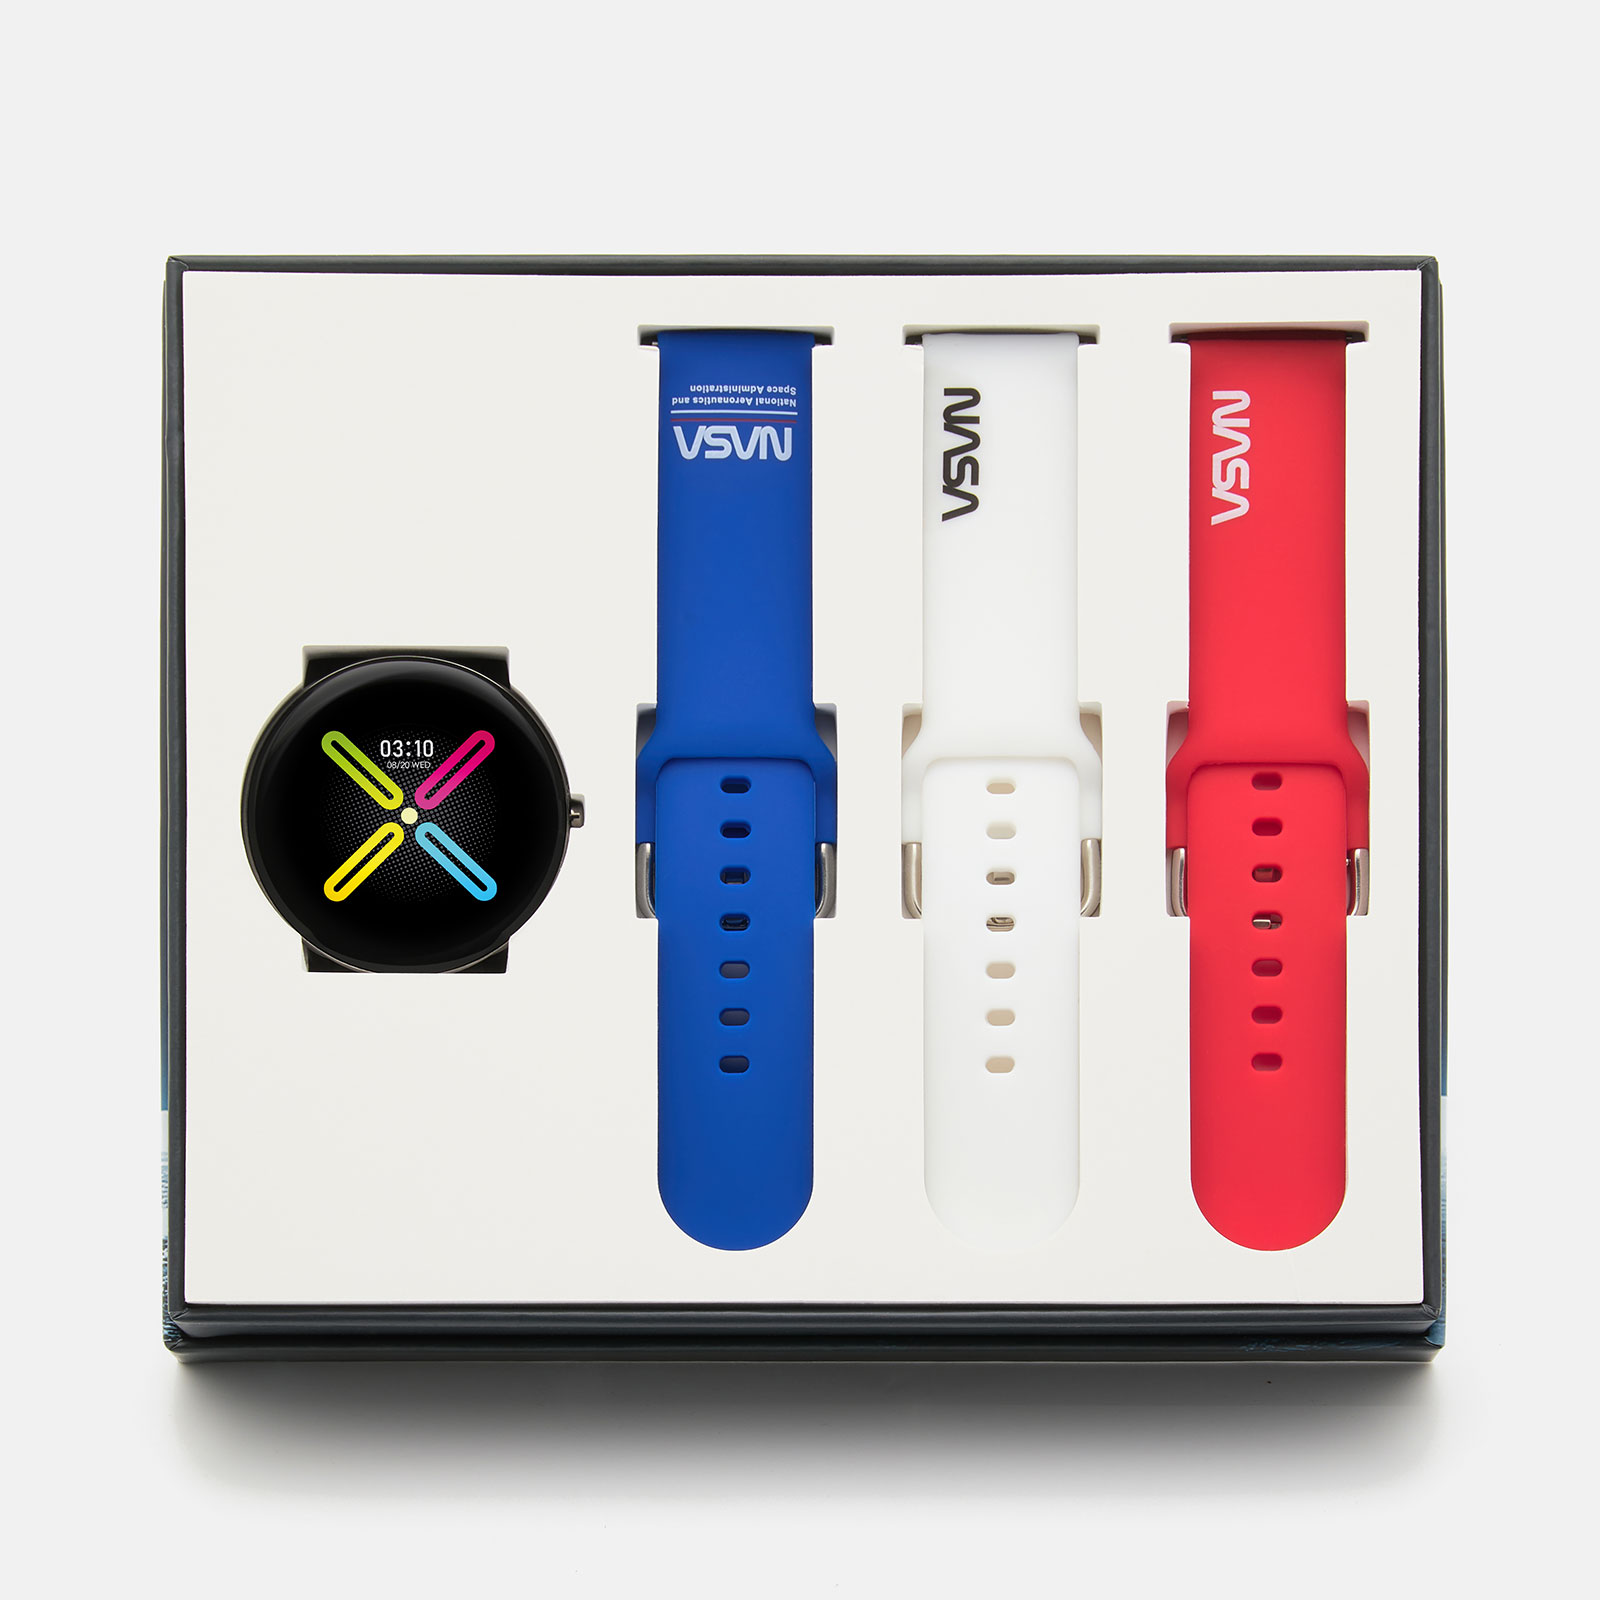 Nasa Smart Watch, 3 extra armband - BNA30160-001